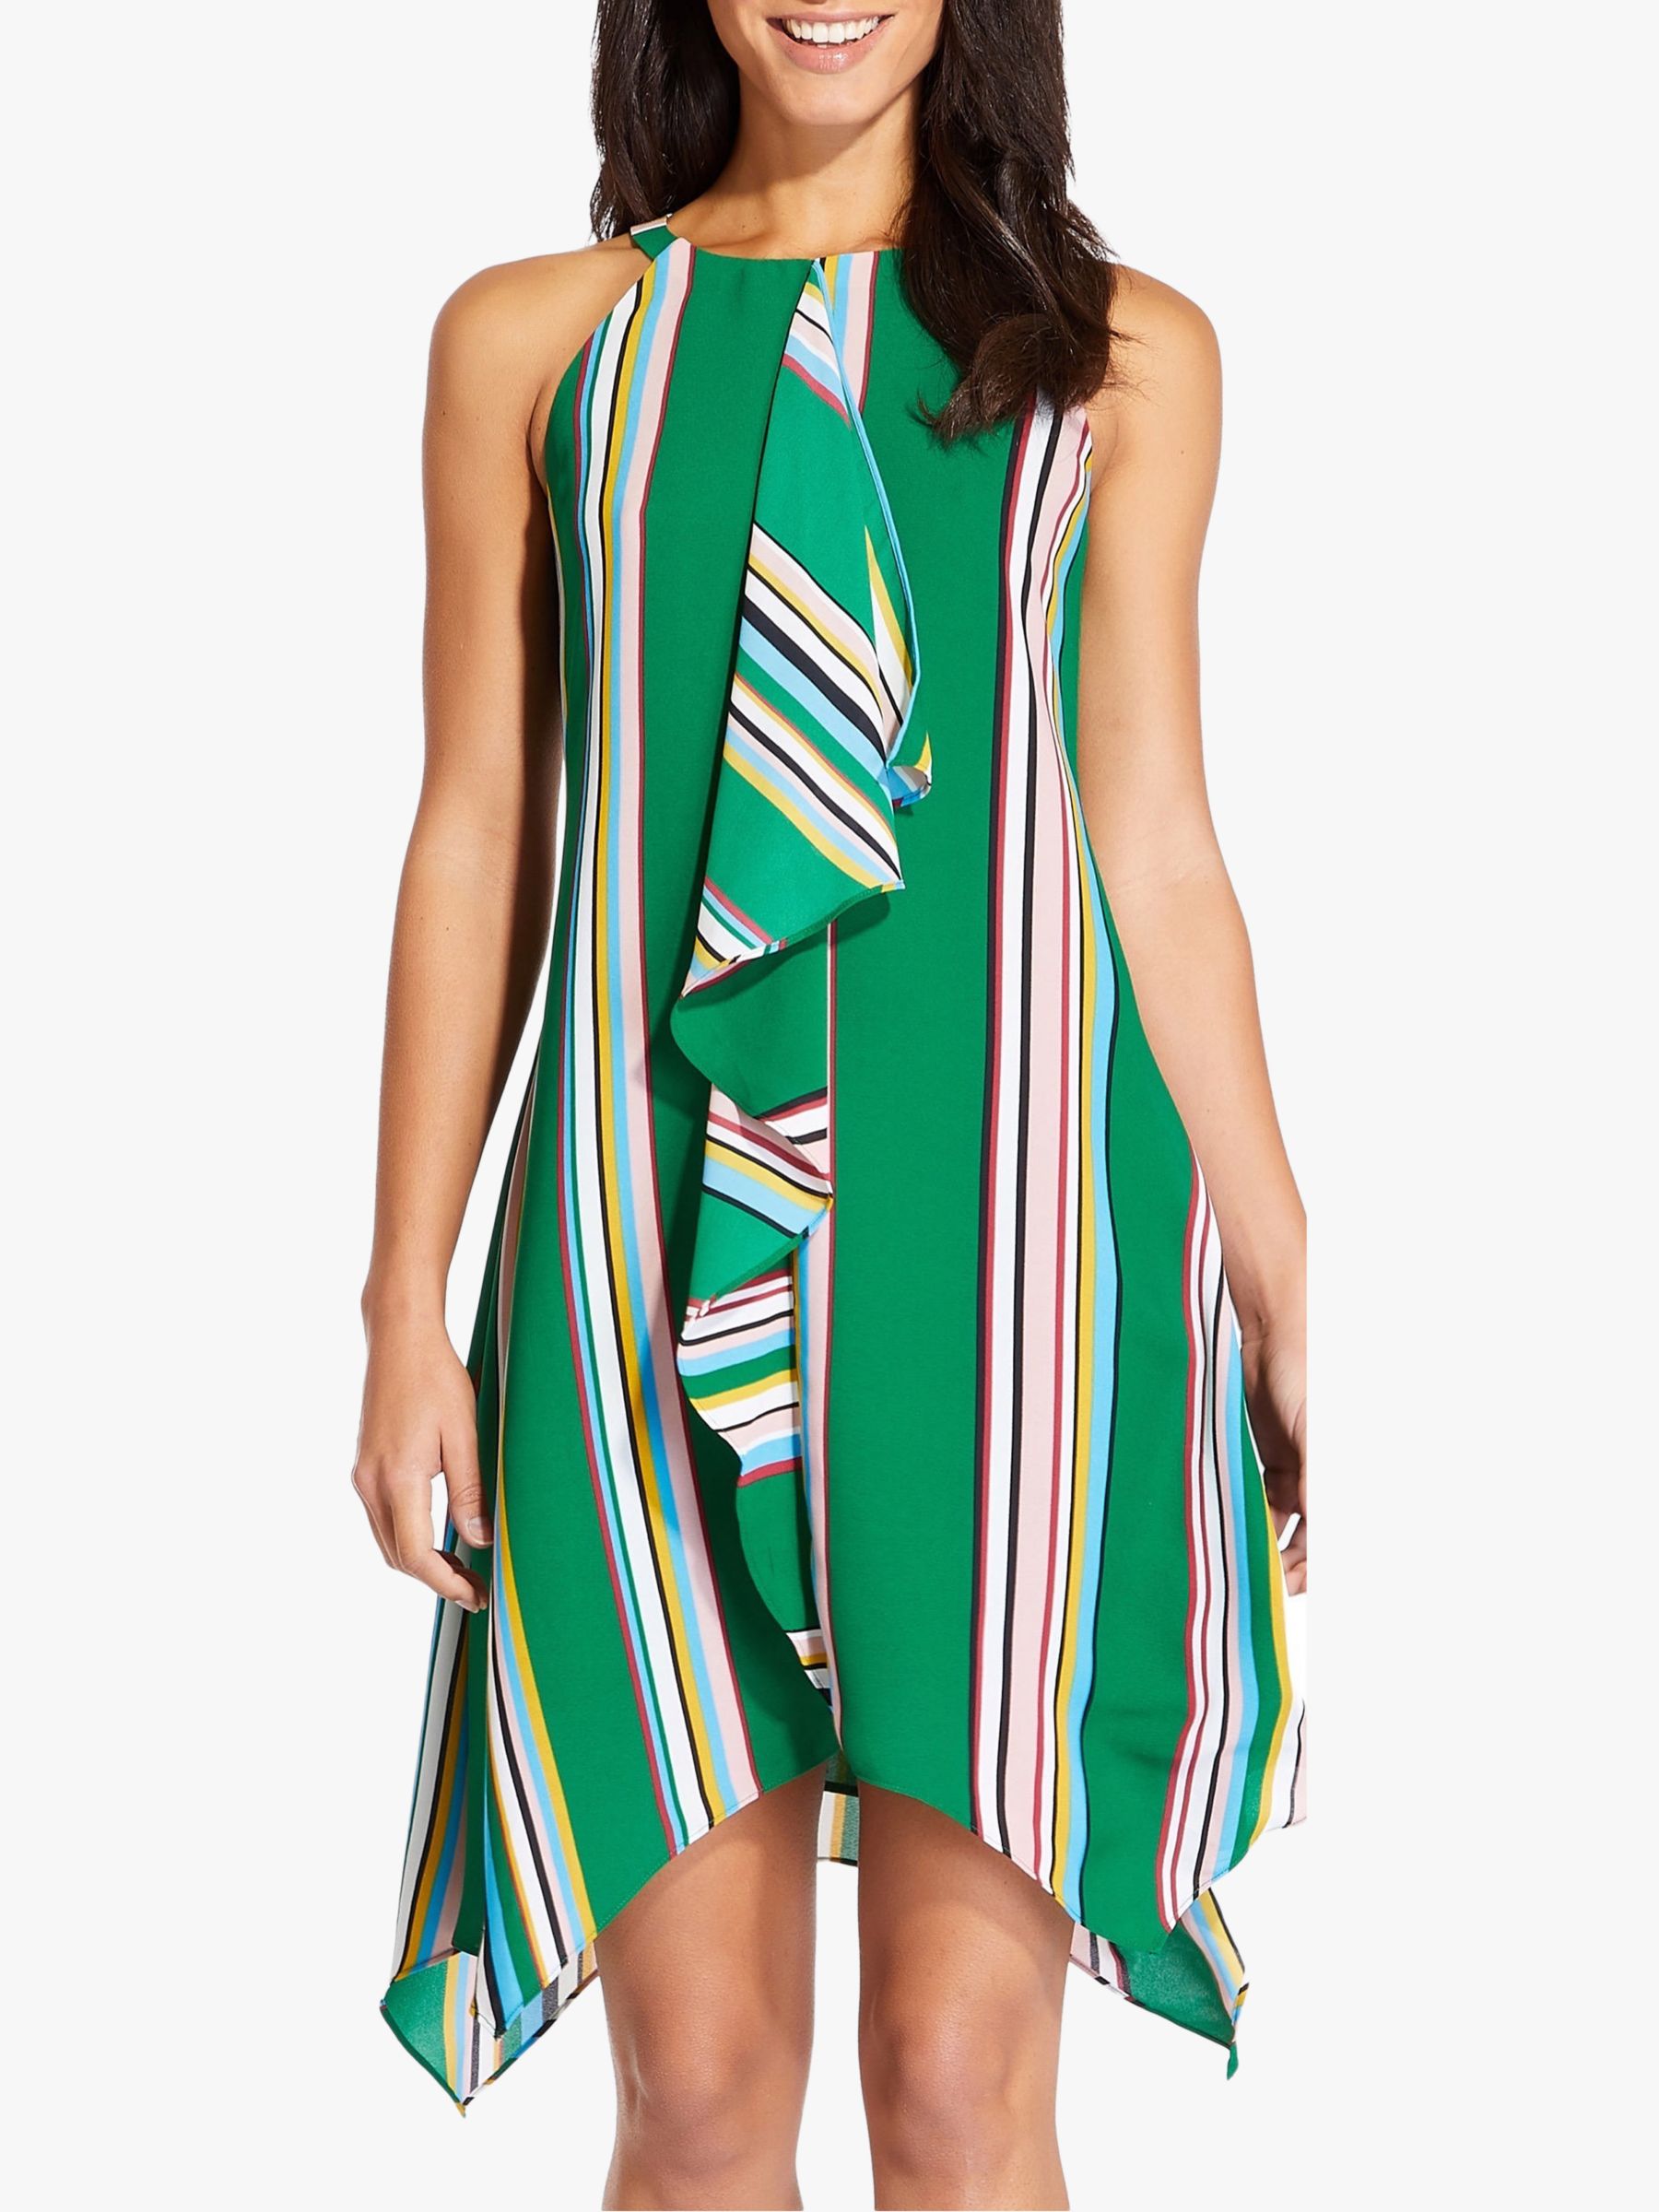 Adrianna Papell Striped Handkerchief Dress, Green/Multi